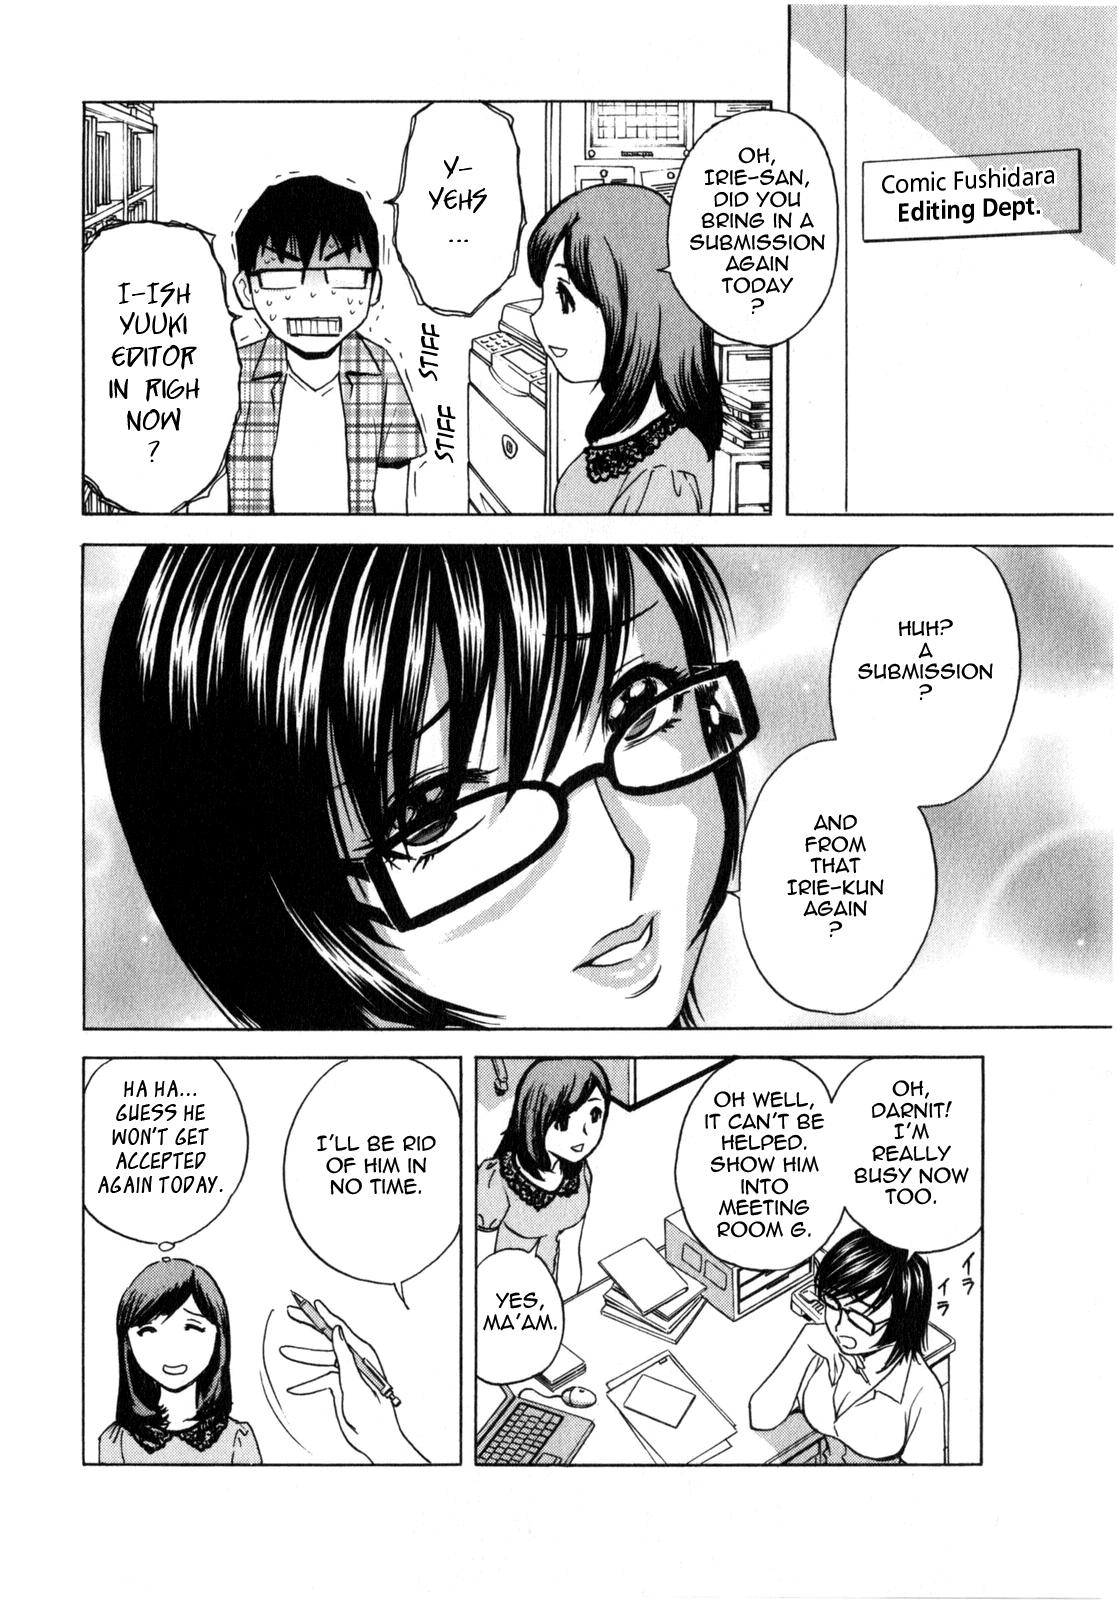 [Hidemaru] Life with Married Women Just Like a Manga 1 - Ch. 1-8 [English] {Tadanohito} 107